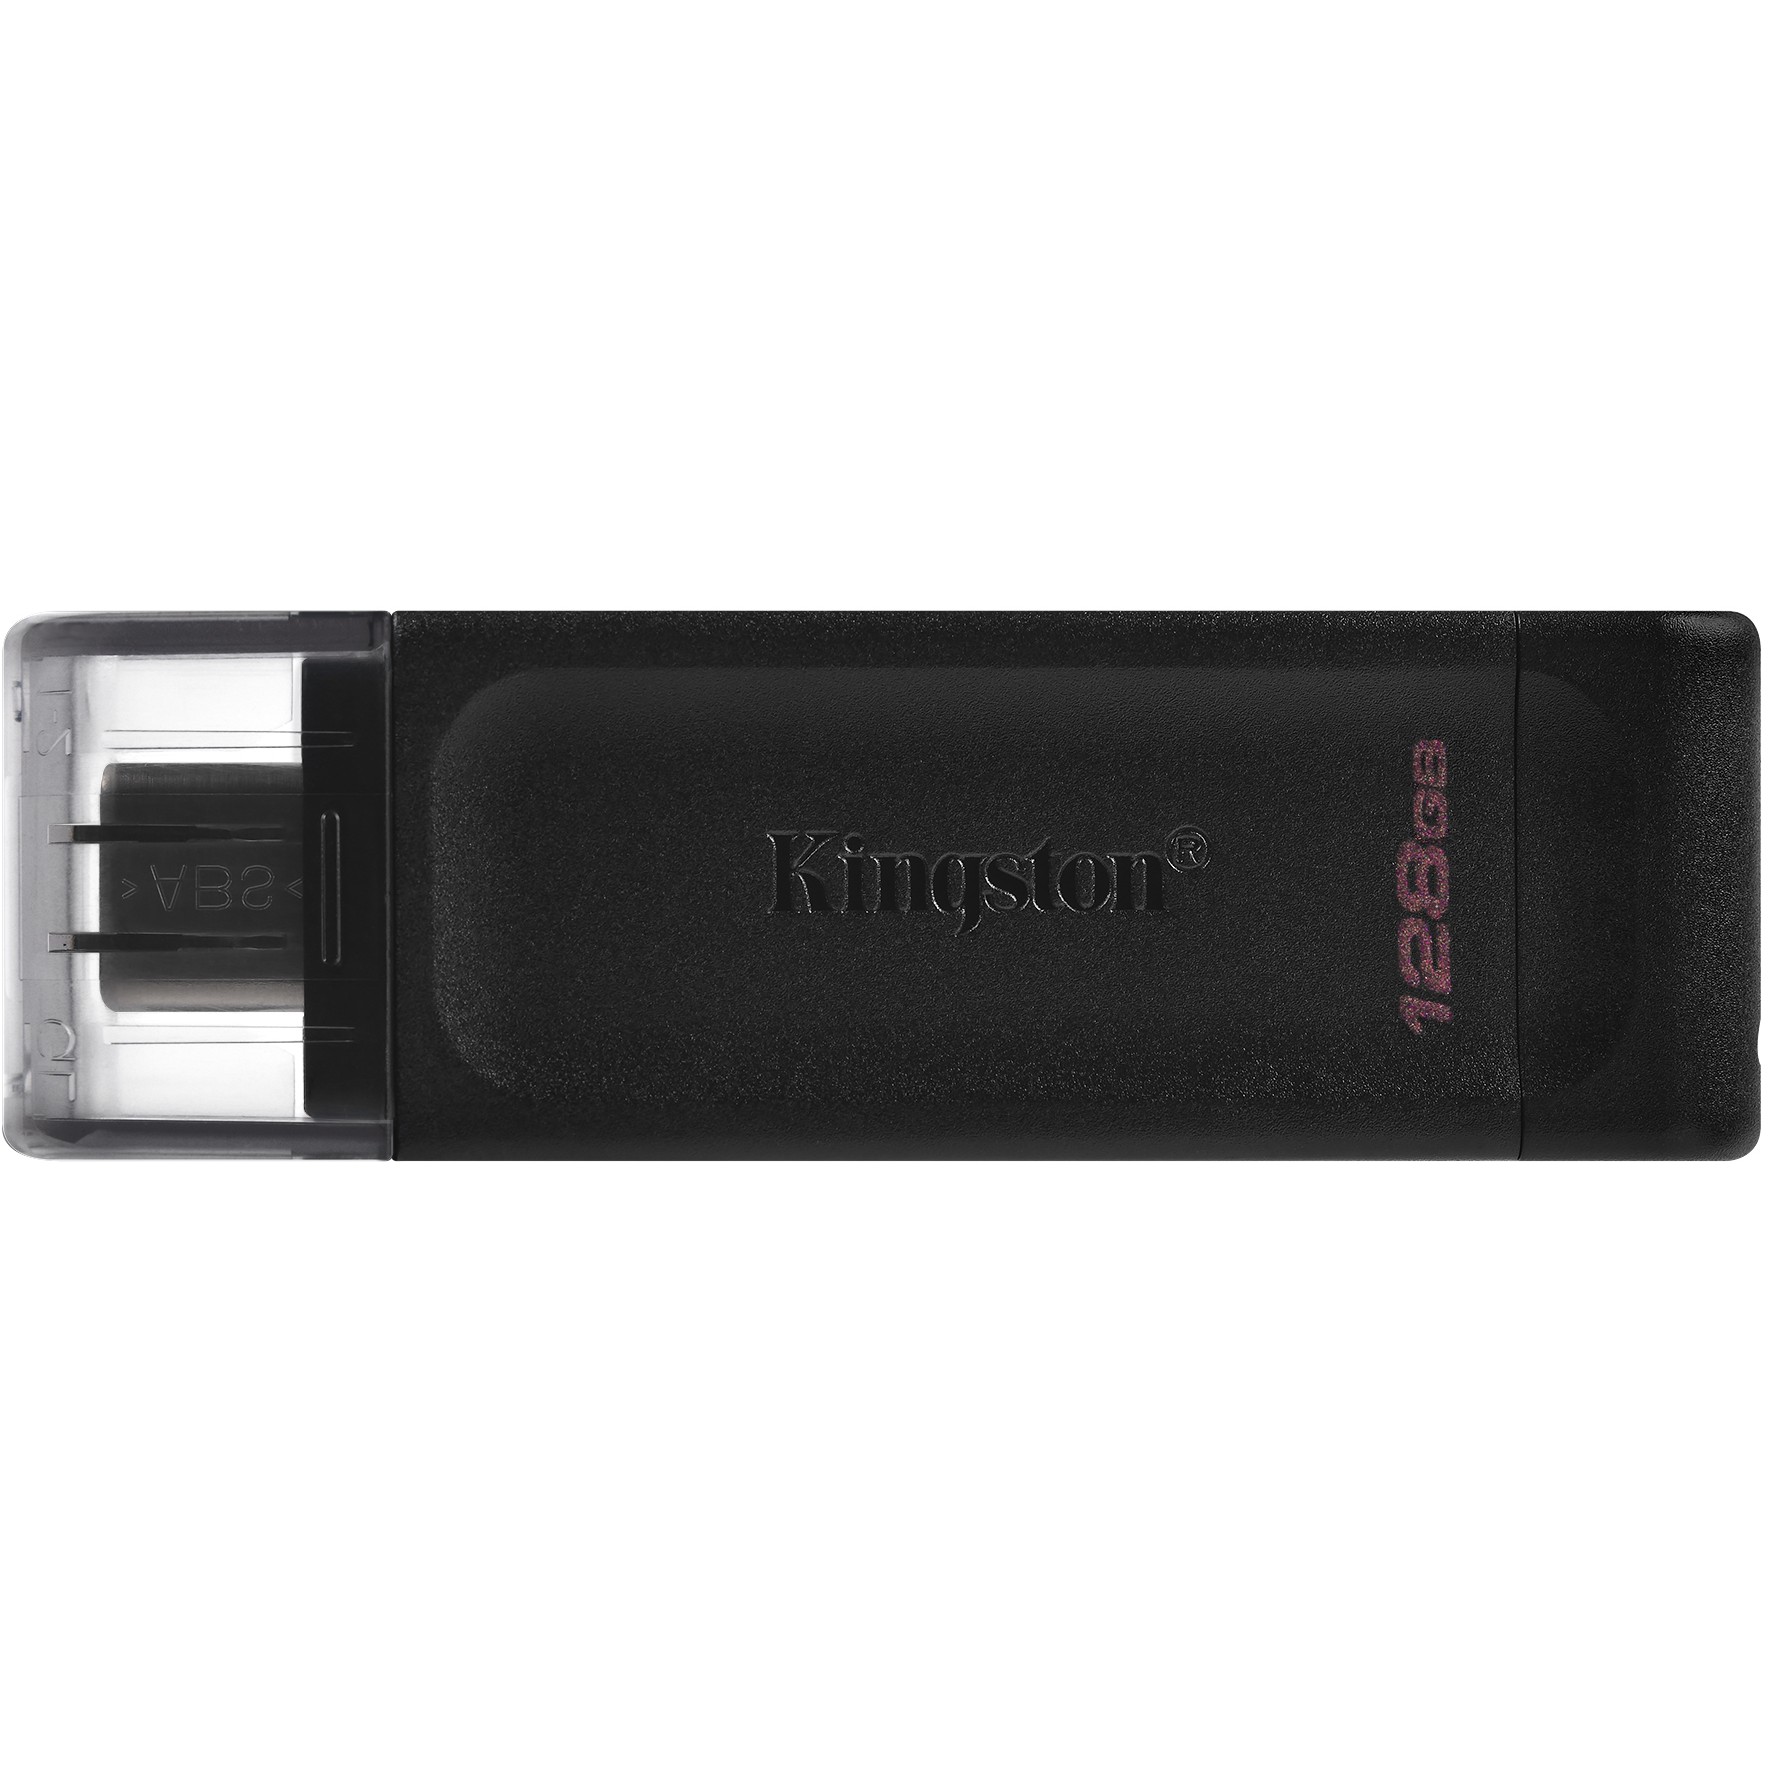 Kingston Technology DataTraveler 70 USB flash drive